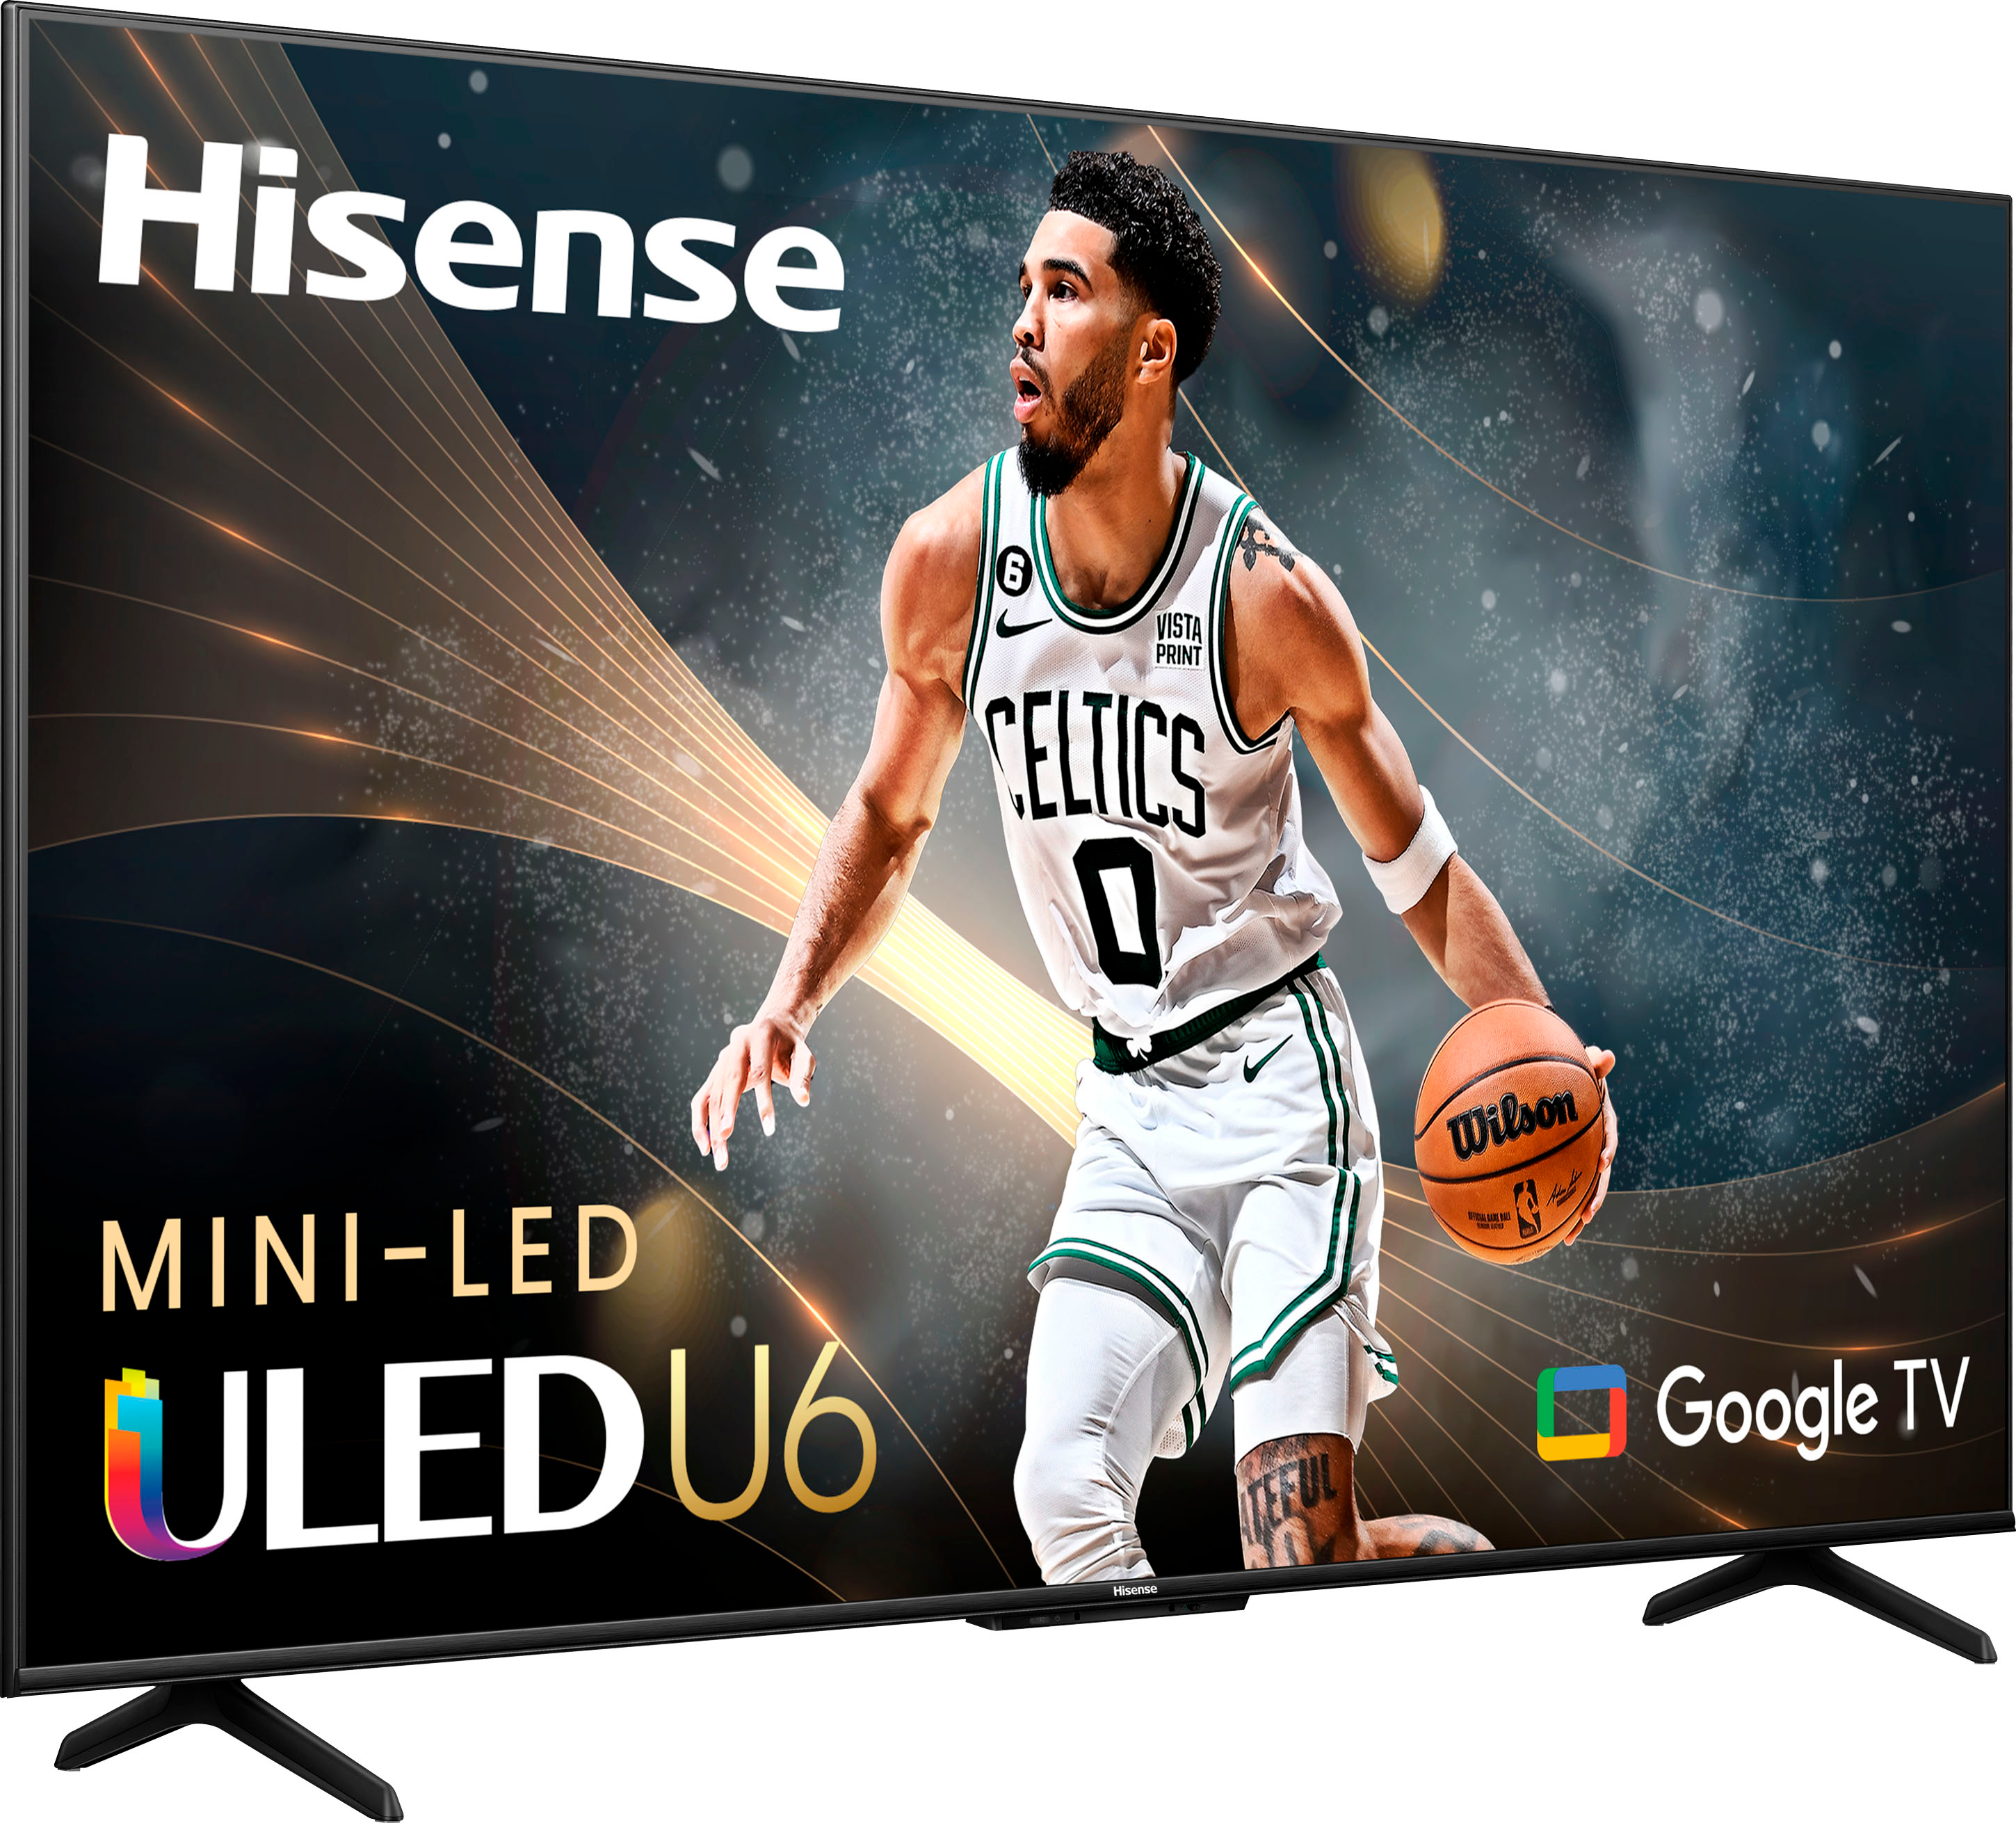 This Hisense 4K HDR QLED Smart TV is under £400 at Box